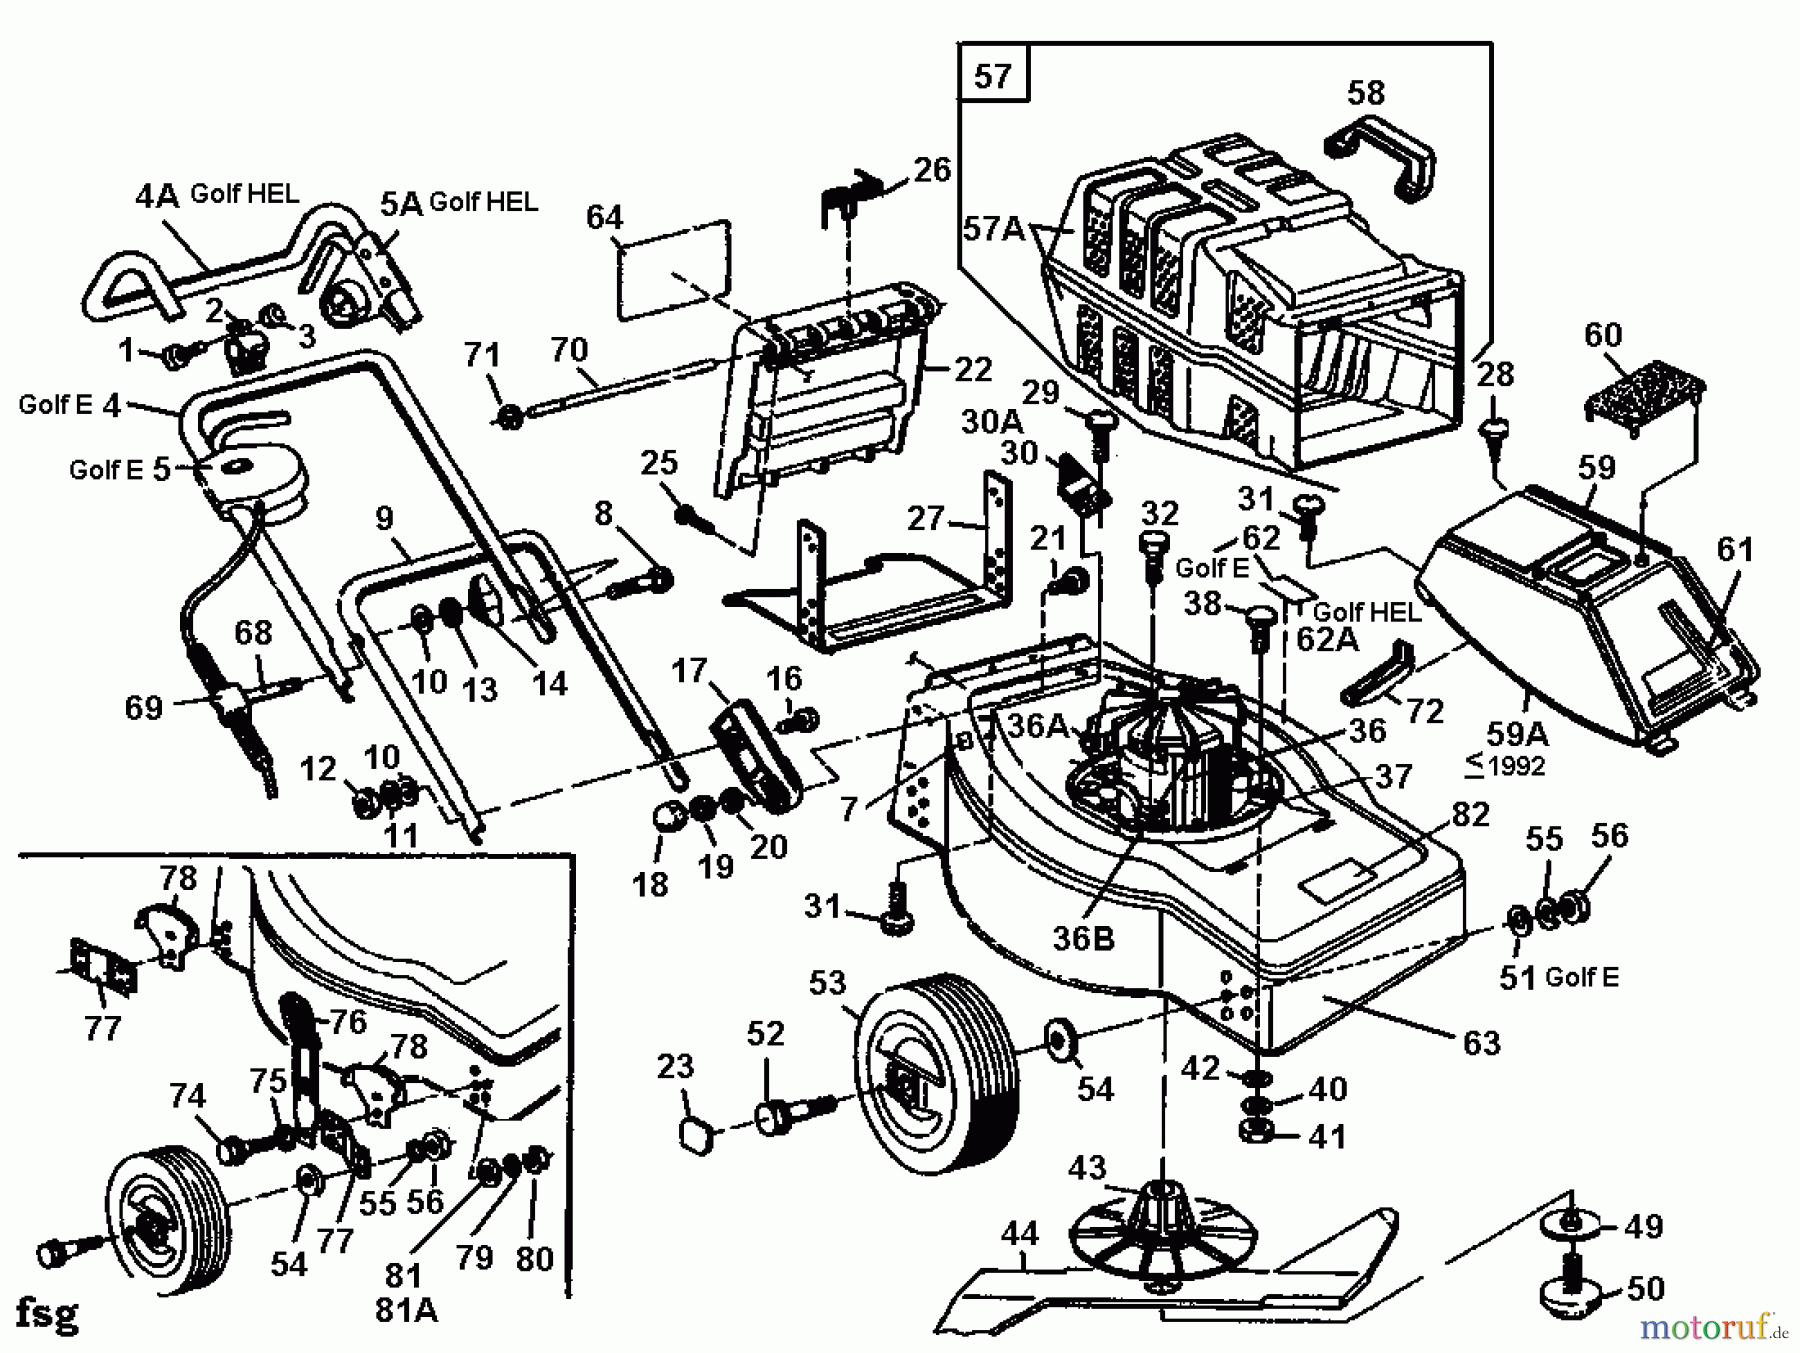  Golf Electric mower HEL 02881.07  (1991) Basic machine